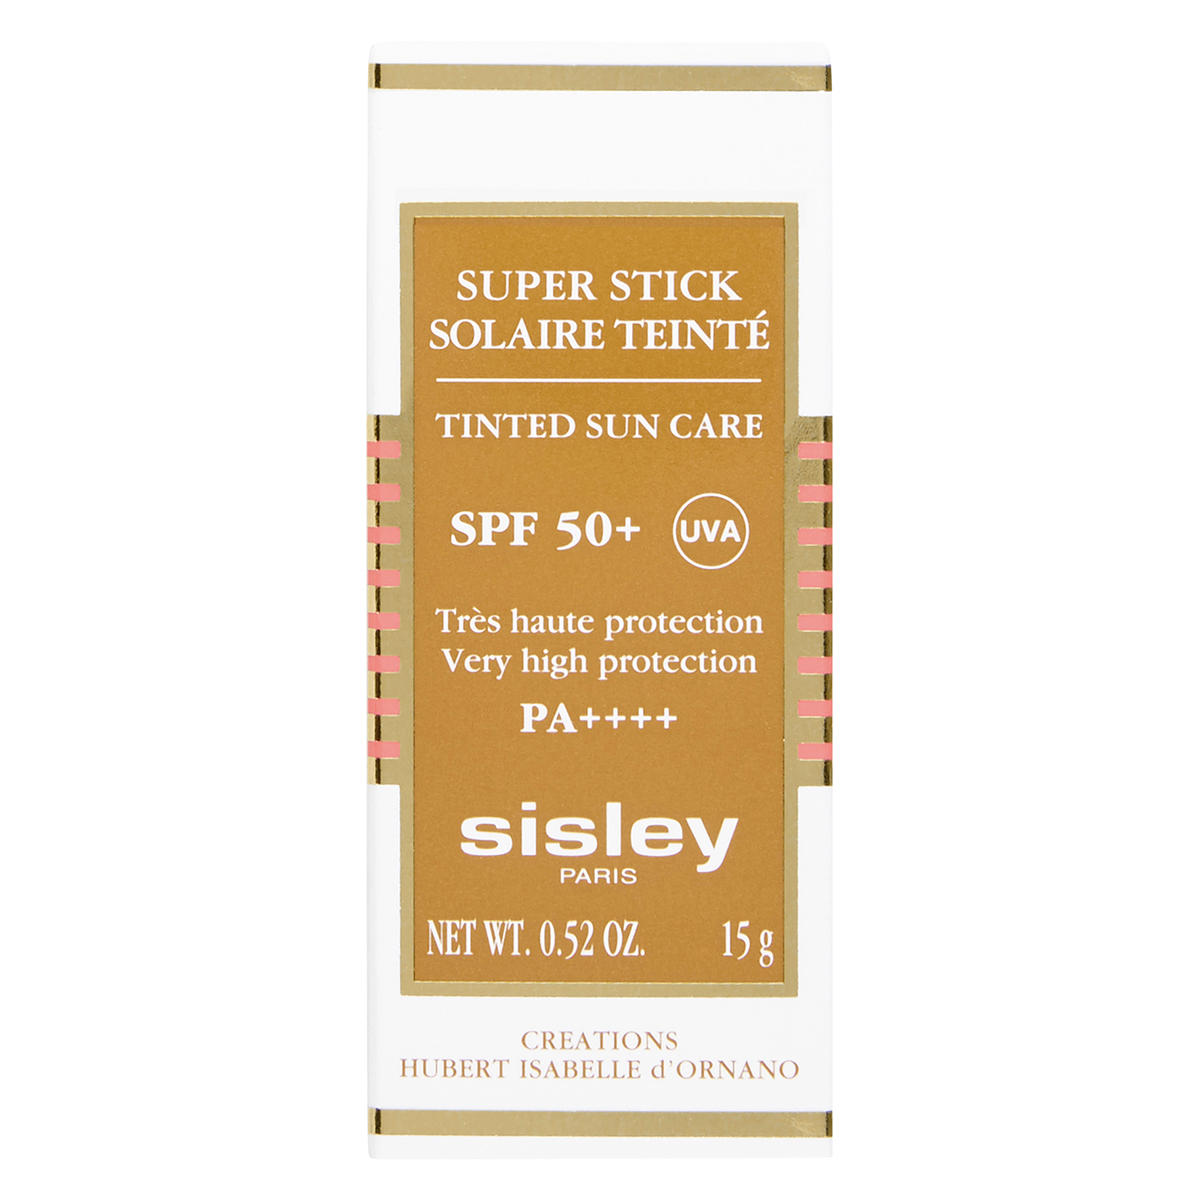 Sisley Paris Sunleÿa G.E. Super Stick Solaire Teinté SFP 50+ 15 g - 3